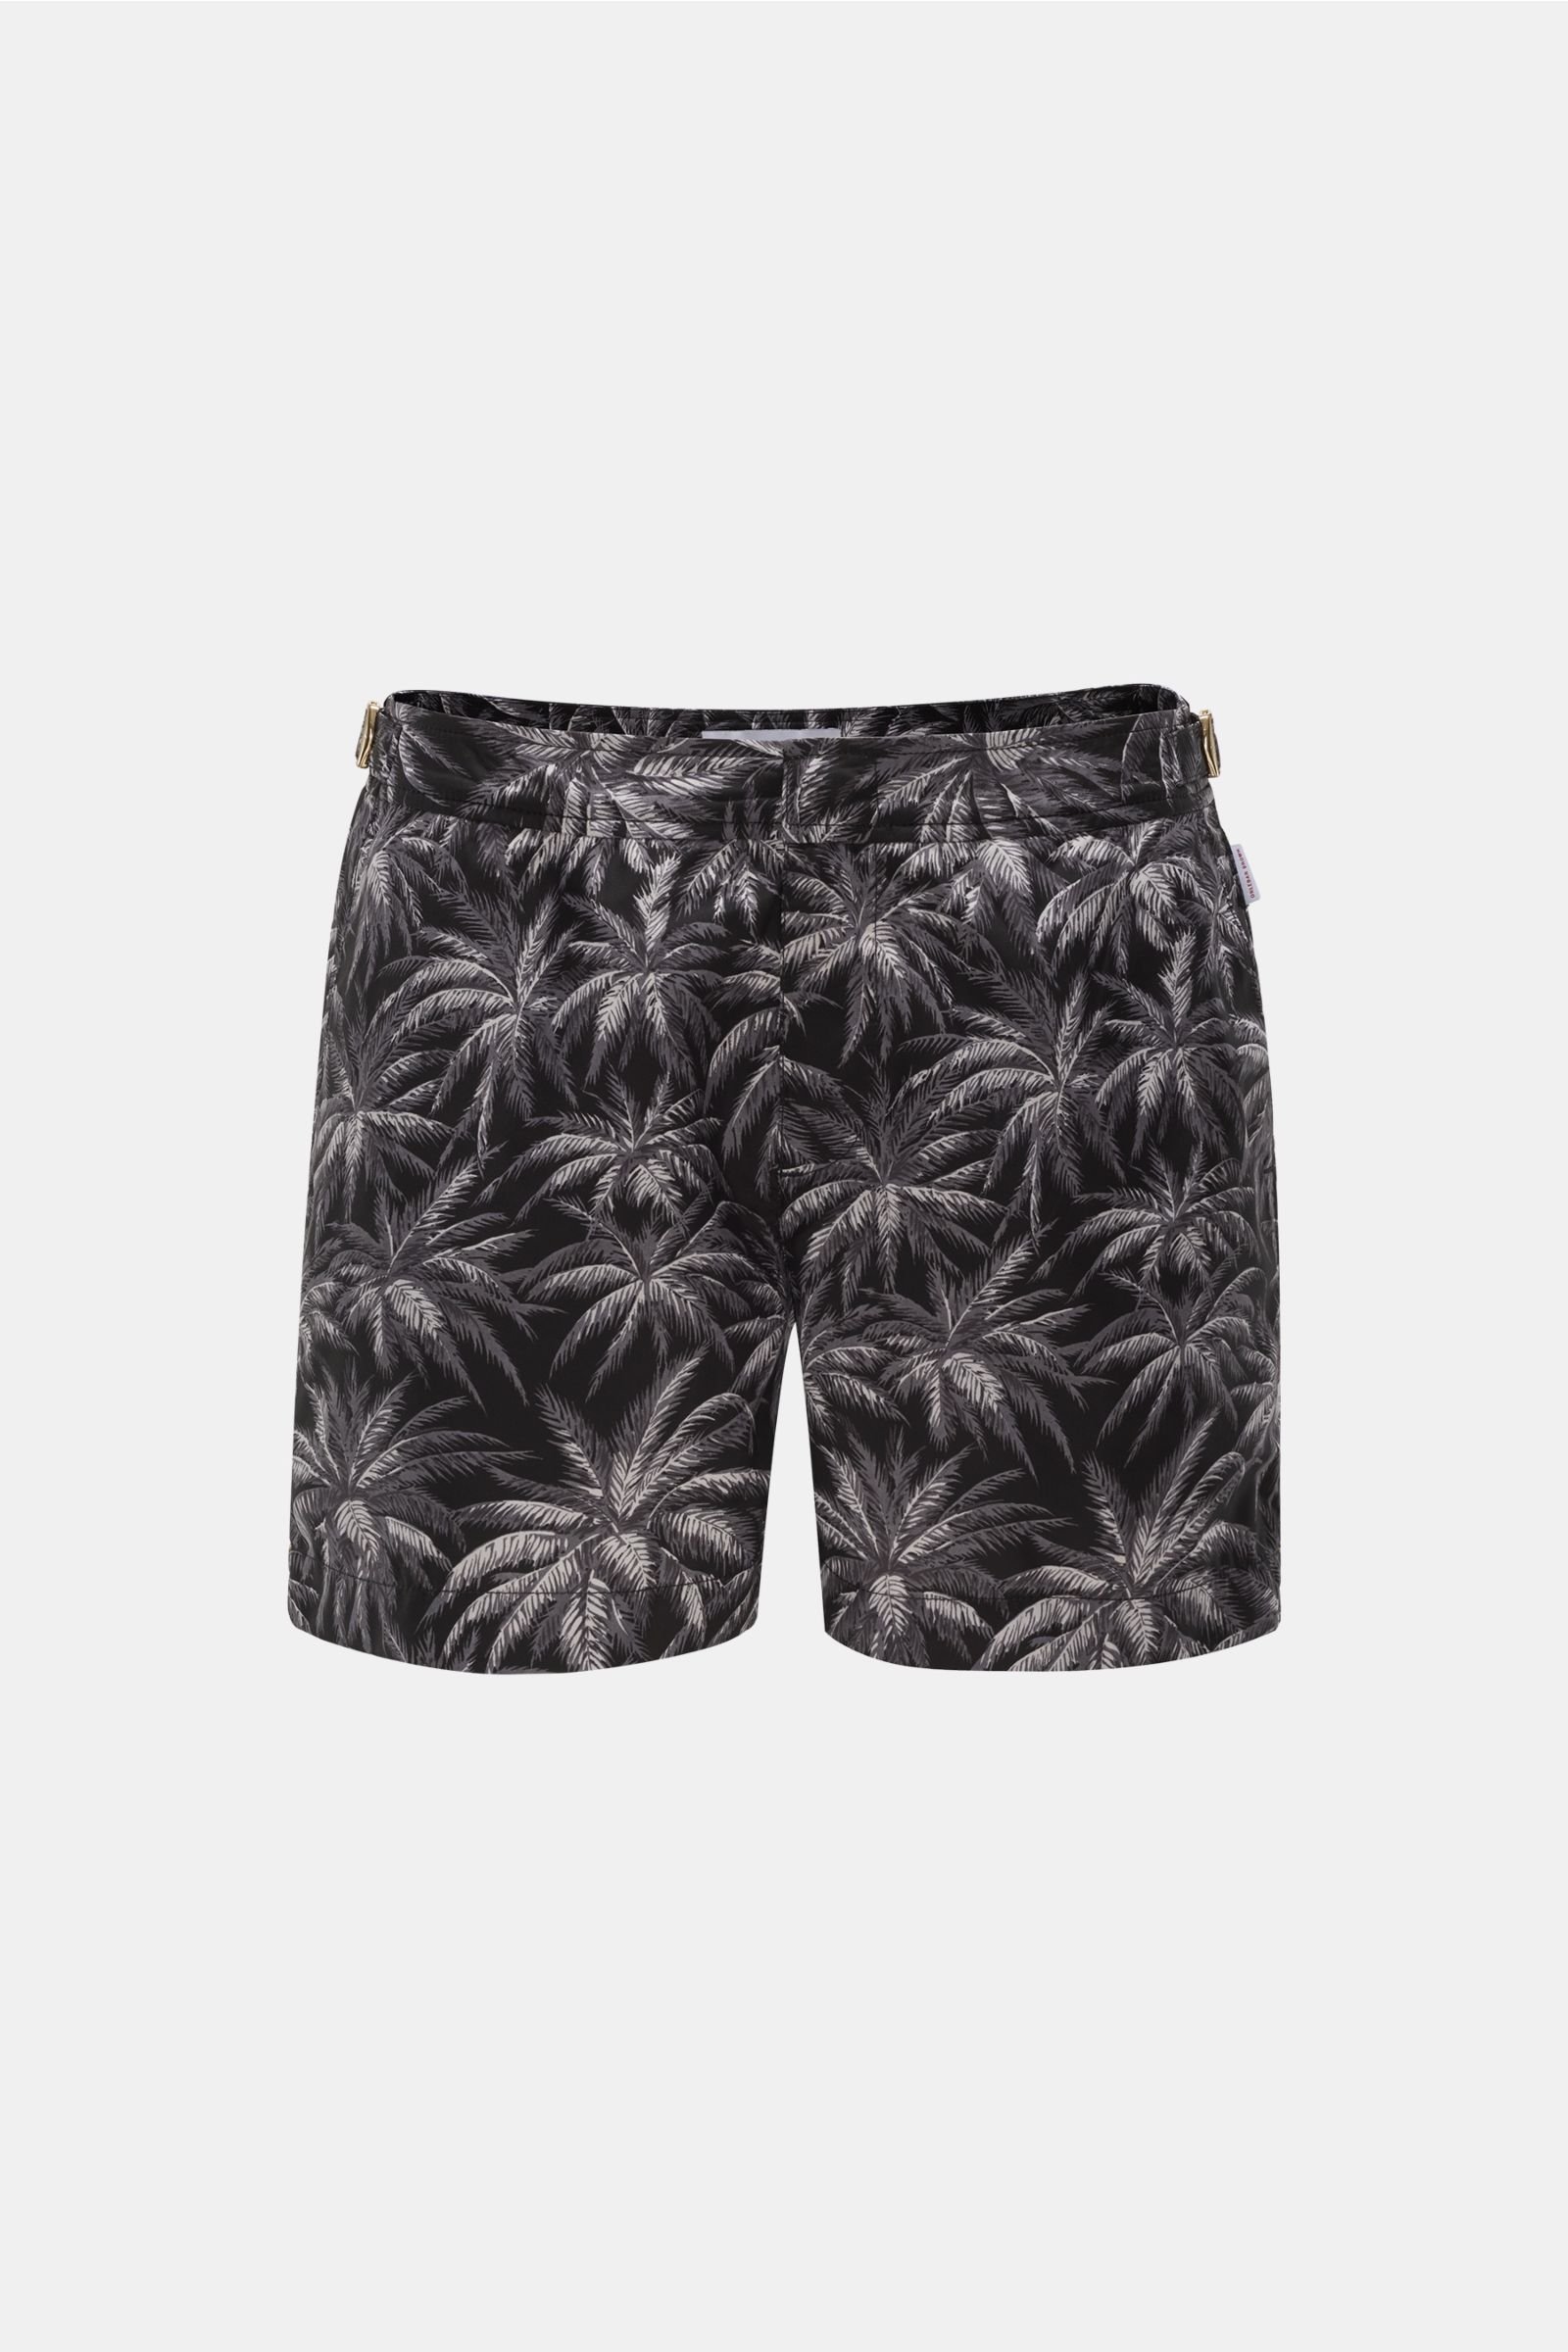 Swim shorts 'Setter' dark grey/black patterned